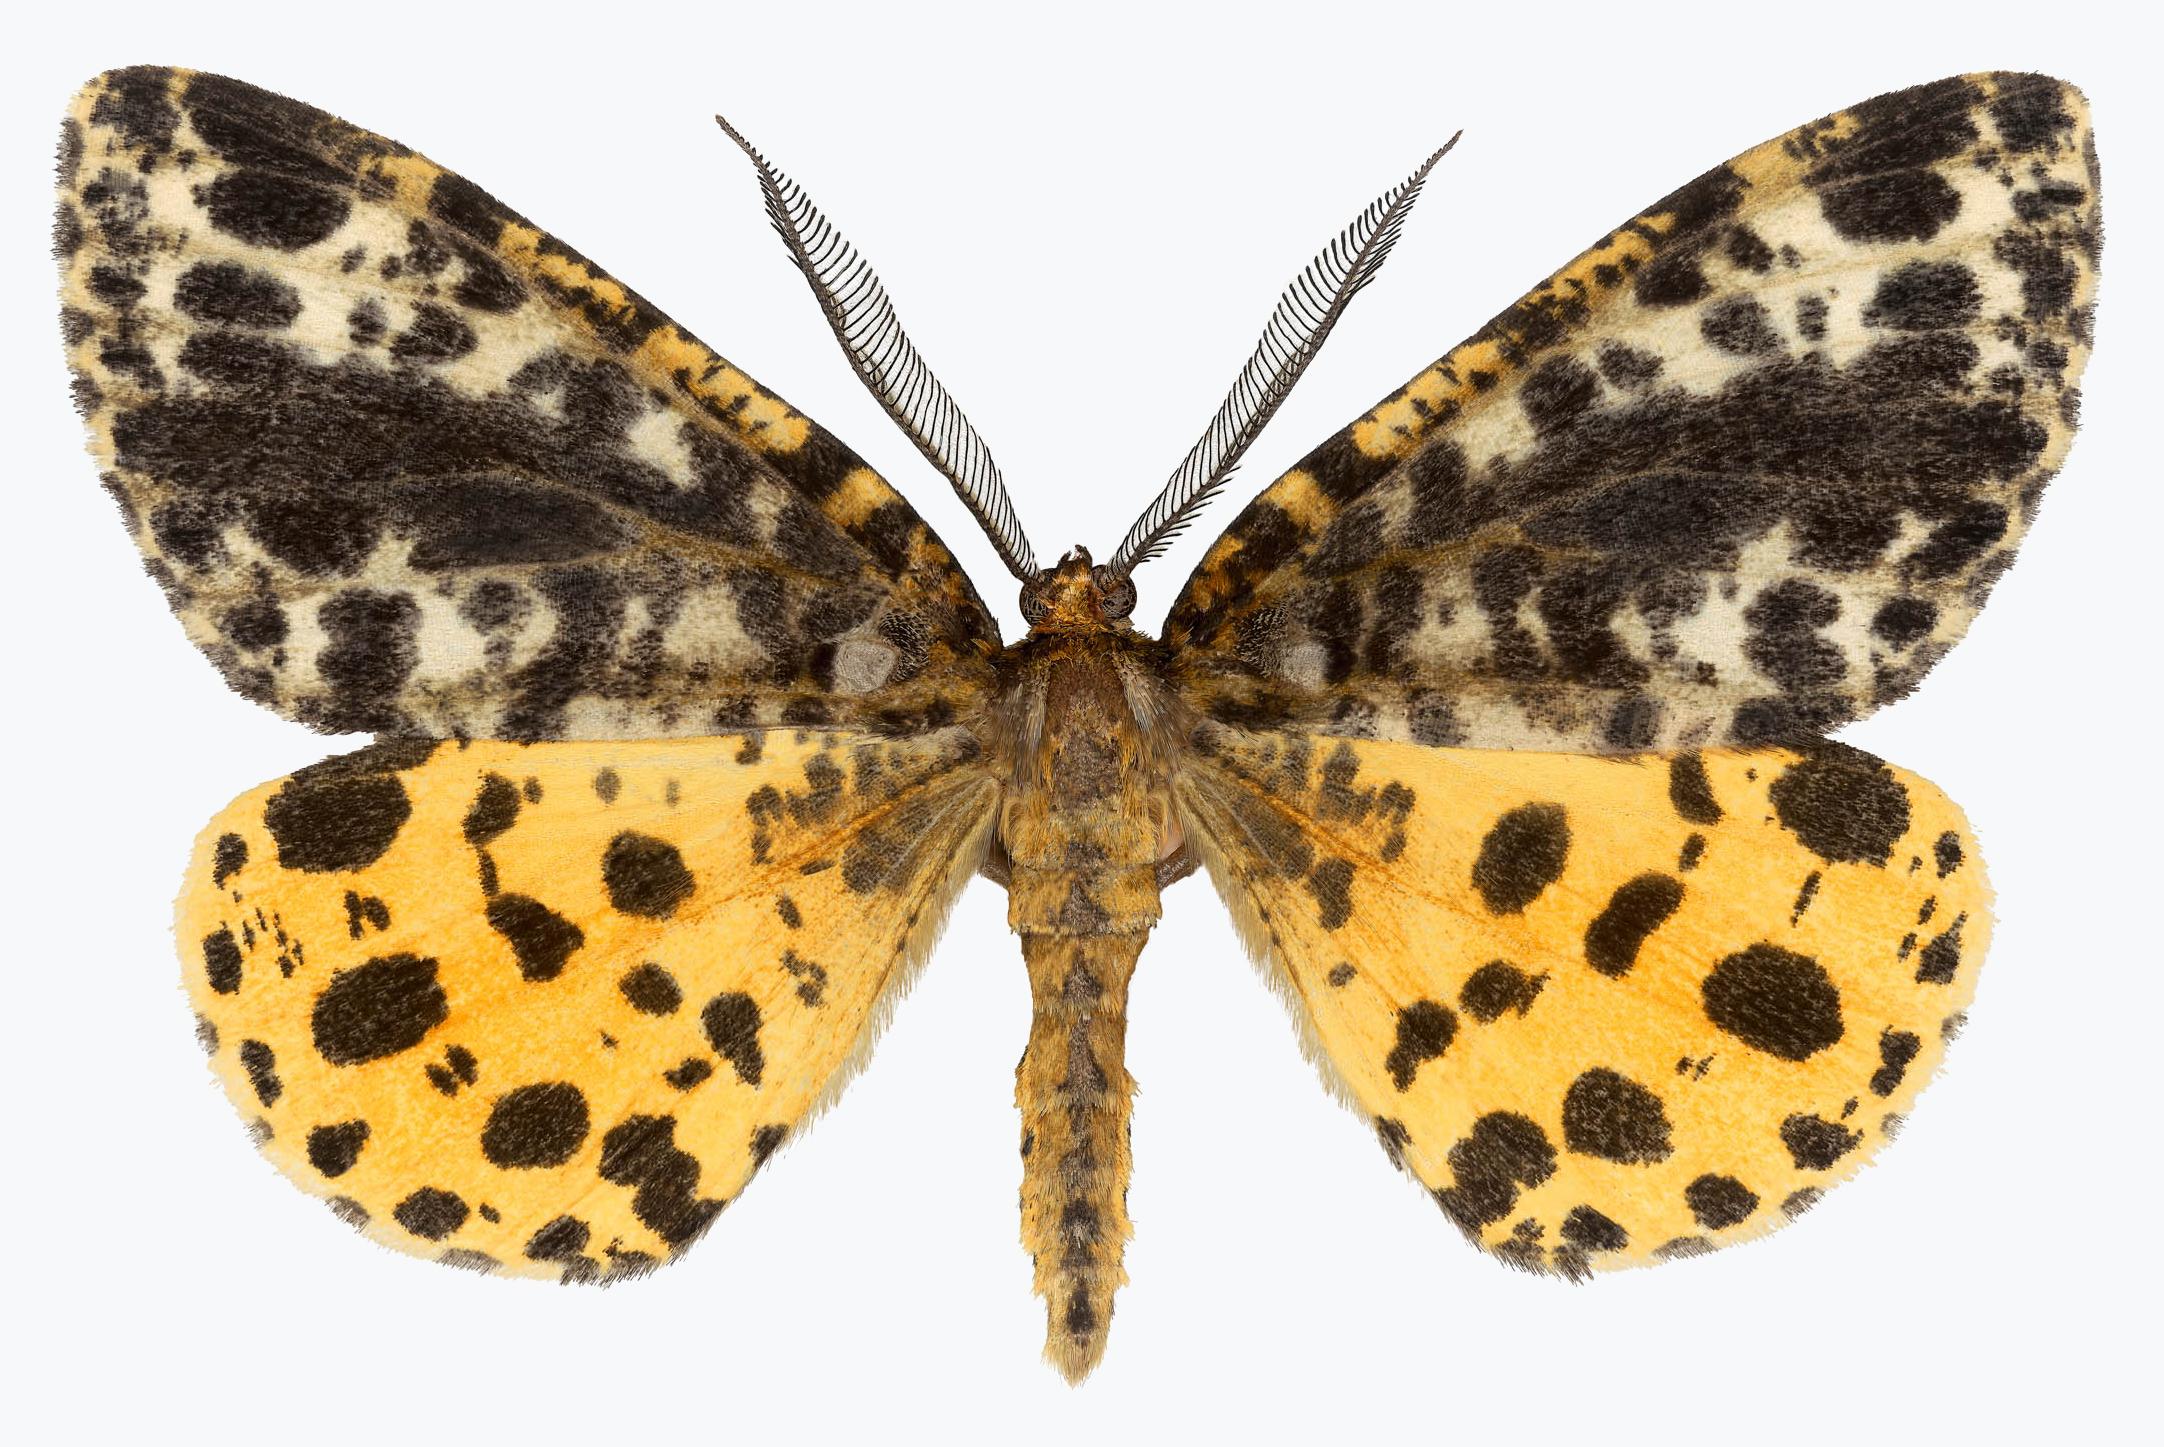 Joseph Scheer Color Photograph - Arichanna Melanaria, Nature Photograph of Yellow, Brown, Black Moth on White